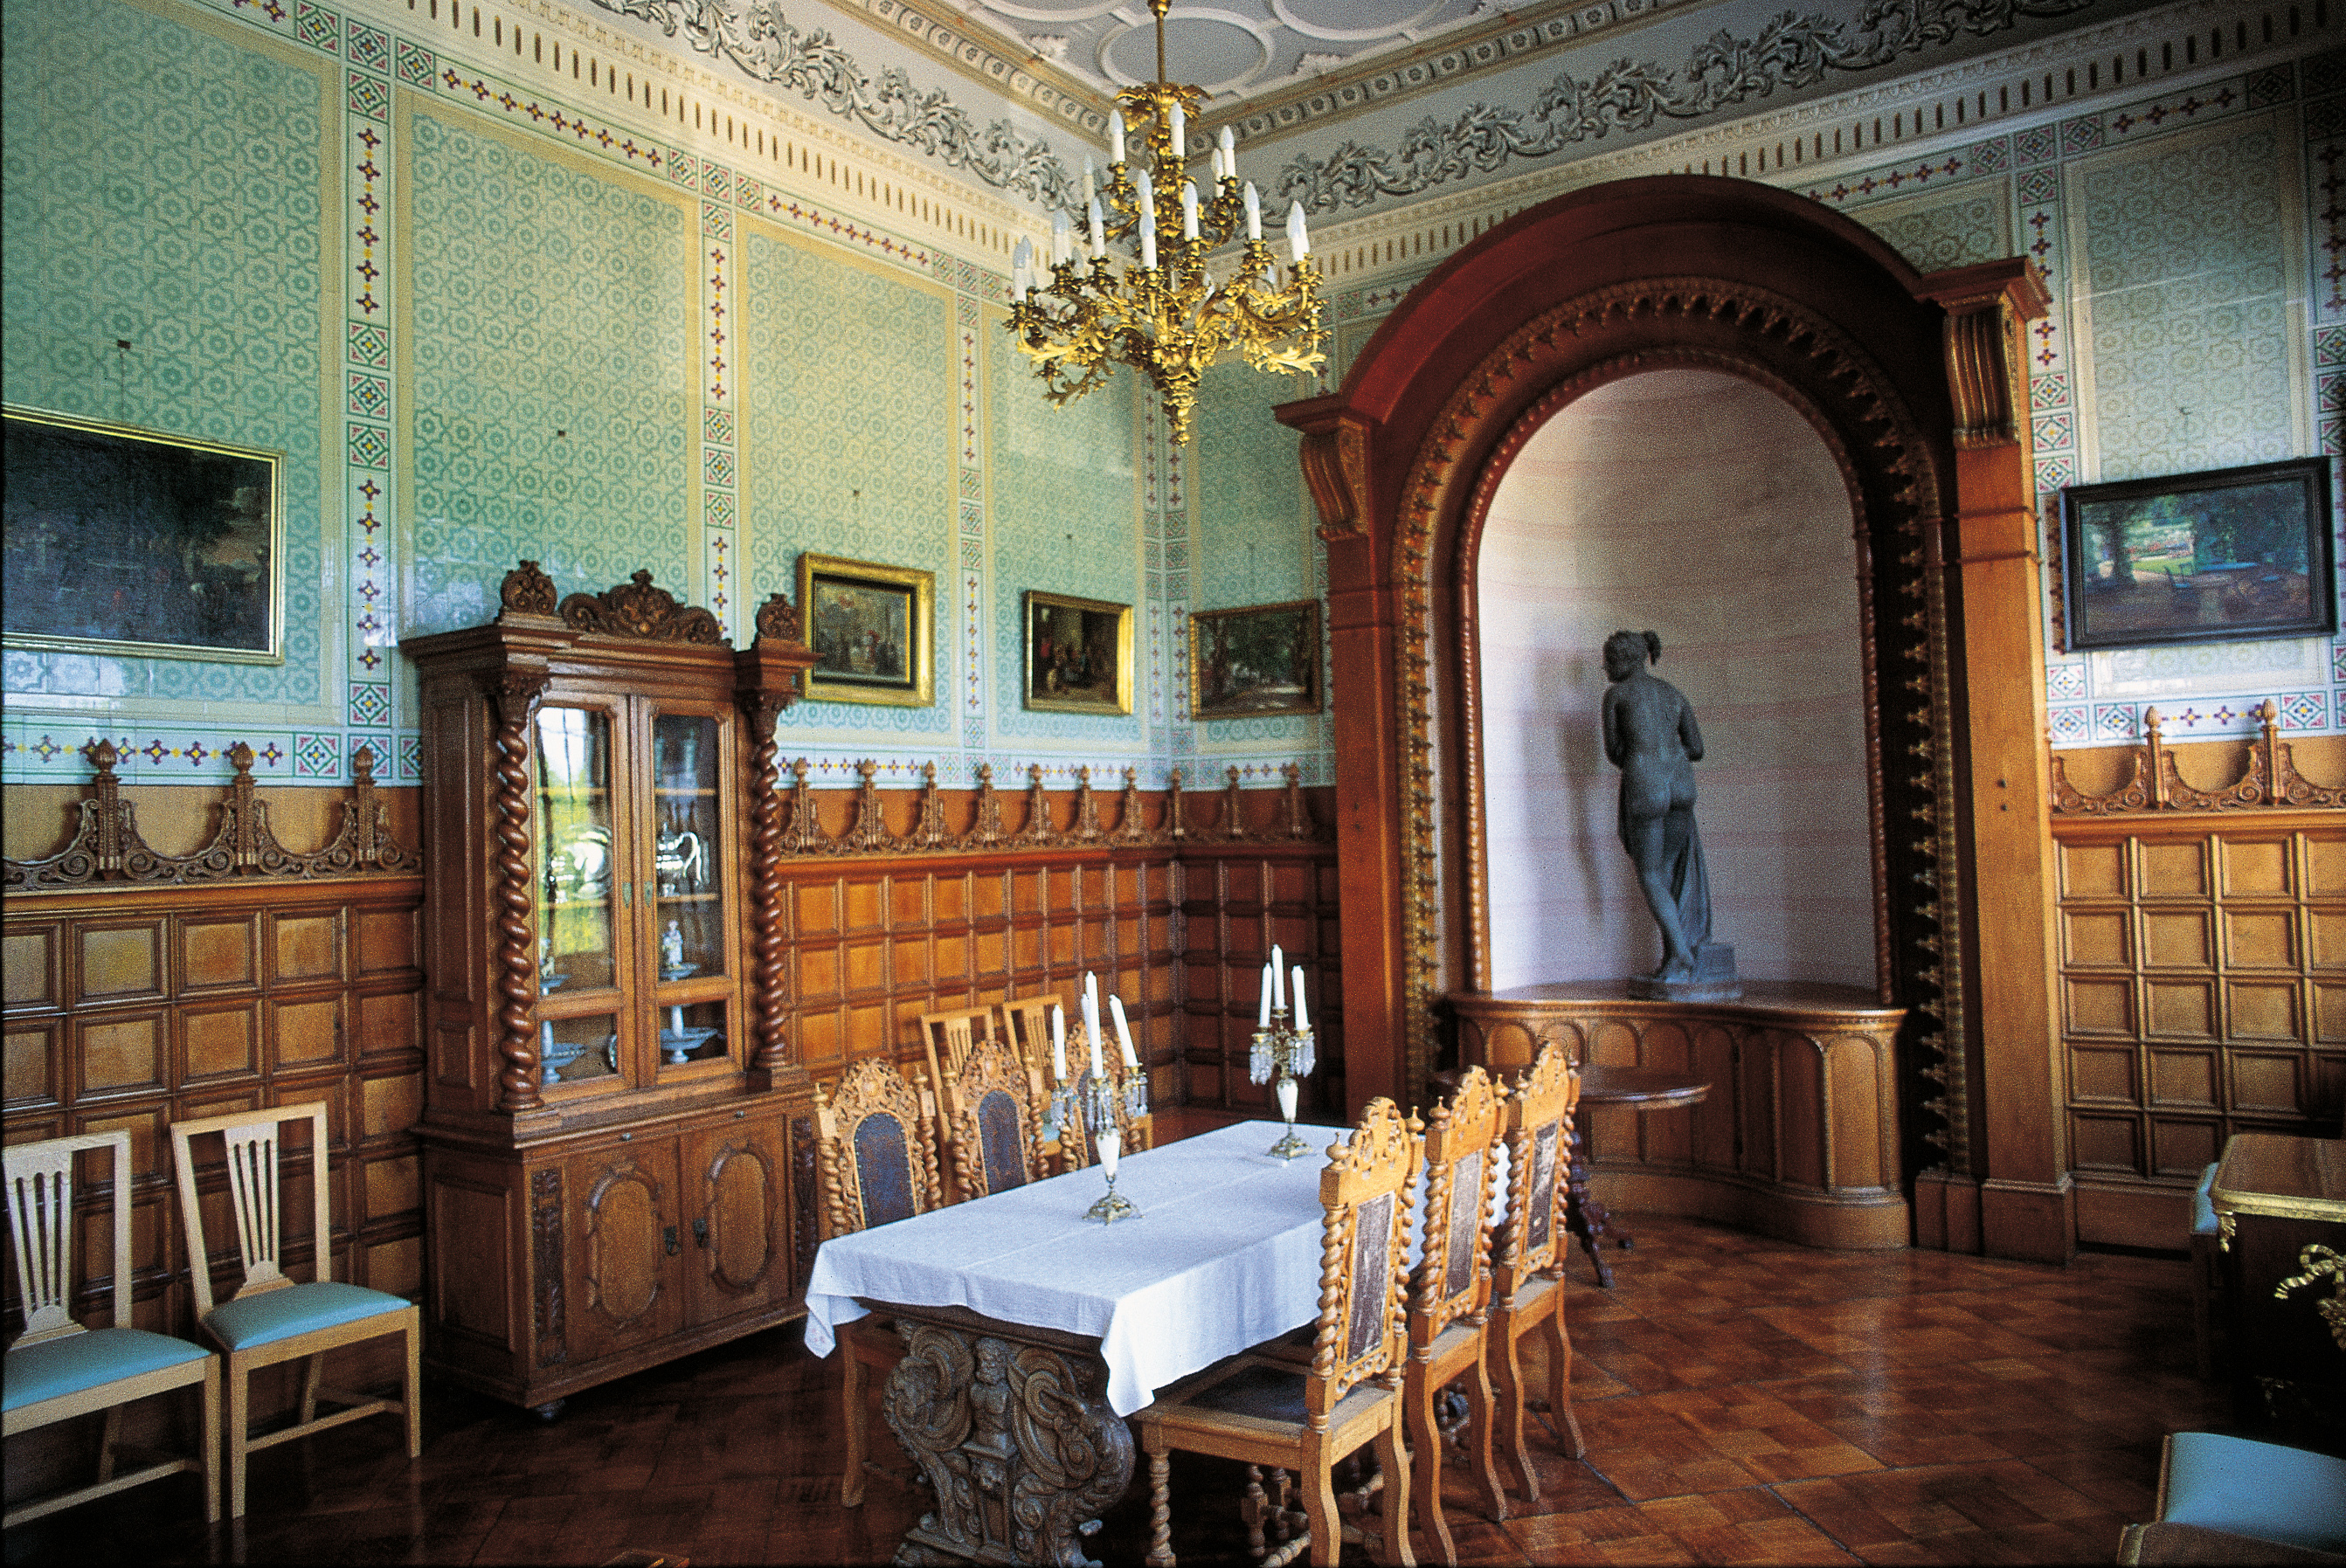 Historischer Saal im Renaissance-Schloss Güstrow.
